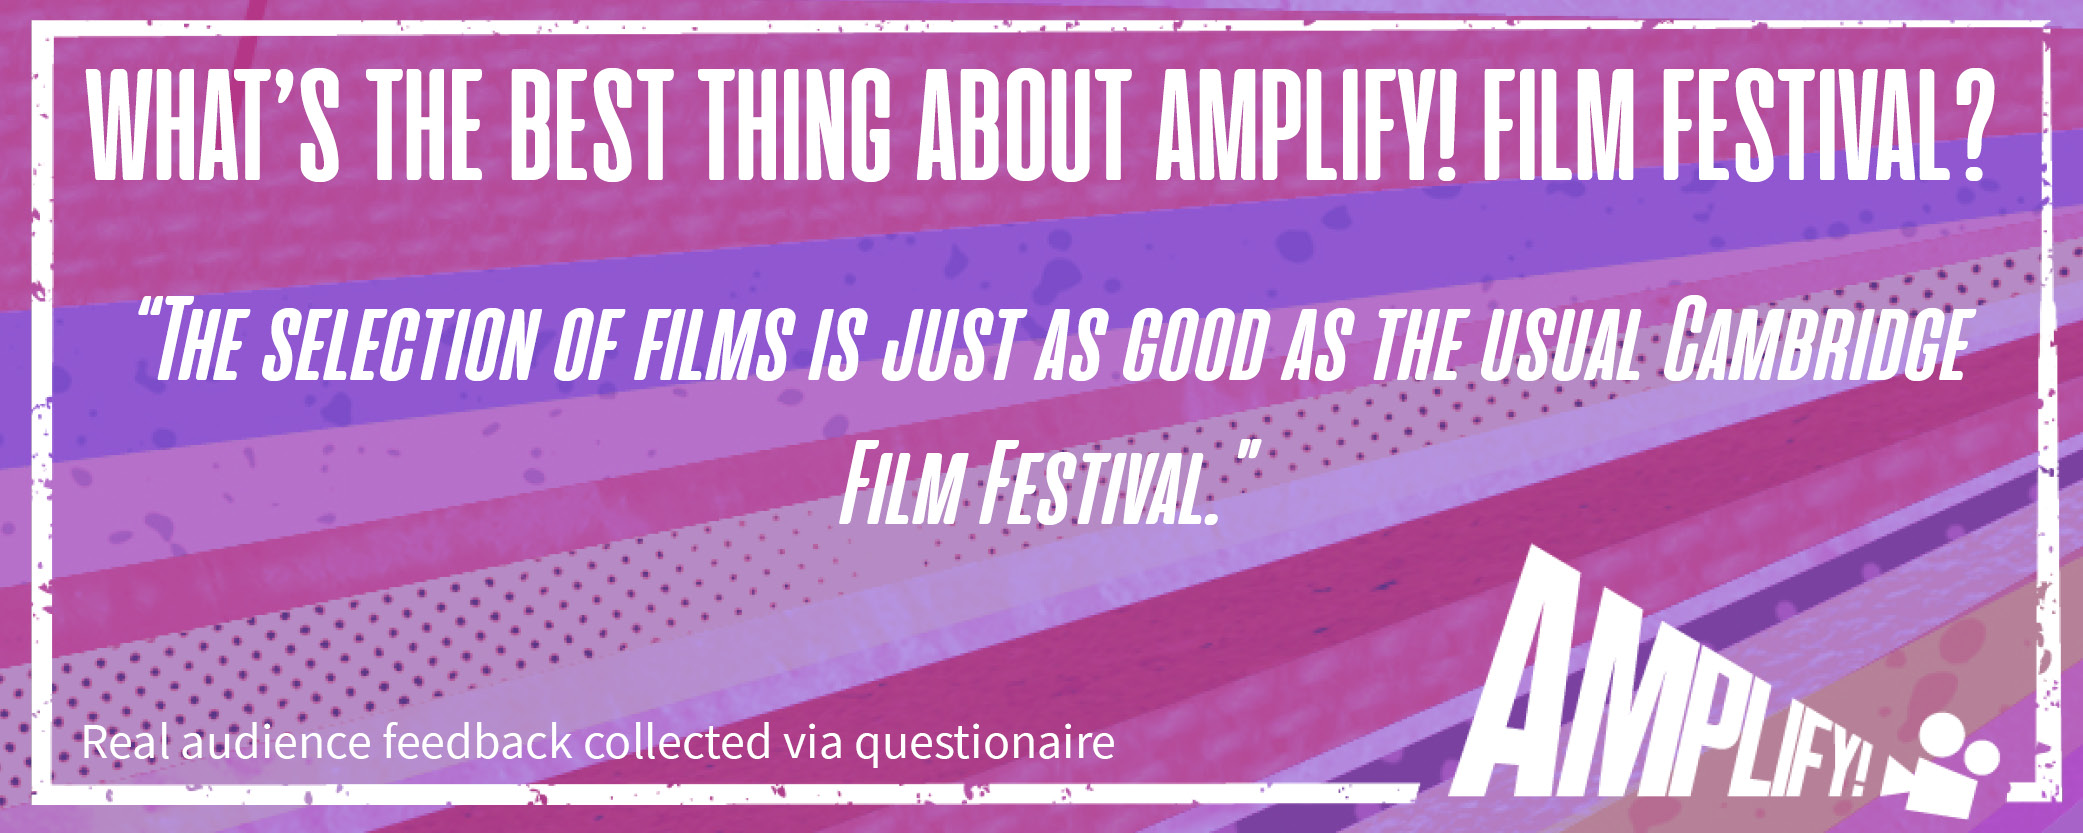 Audience feedback on Amplify Film FEstival